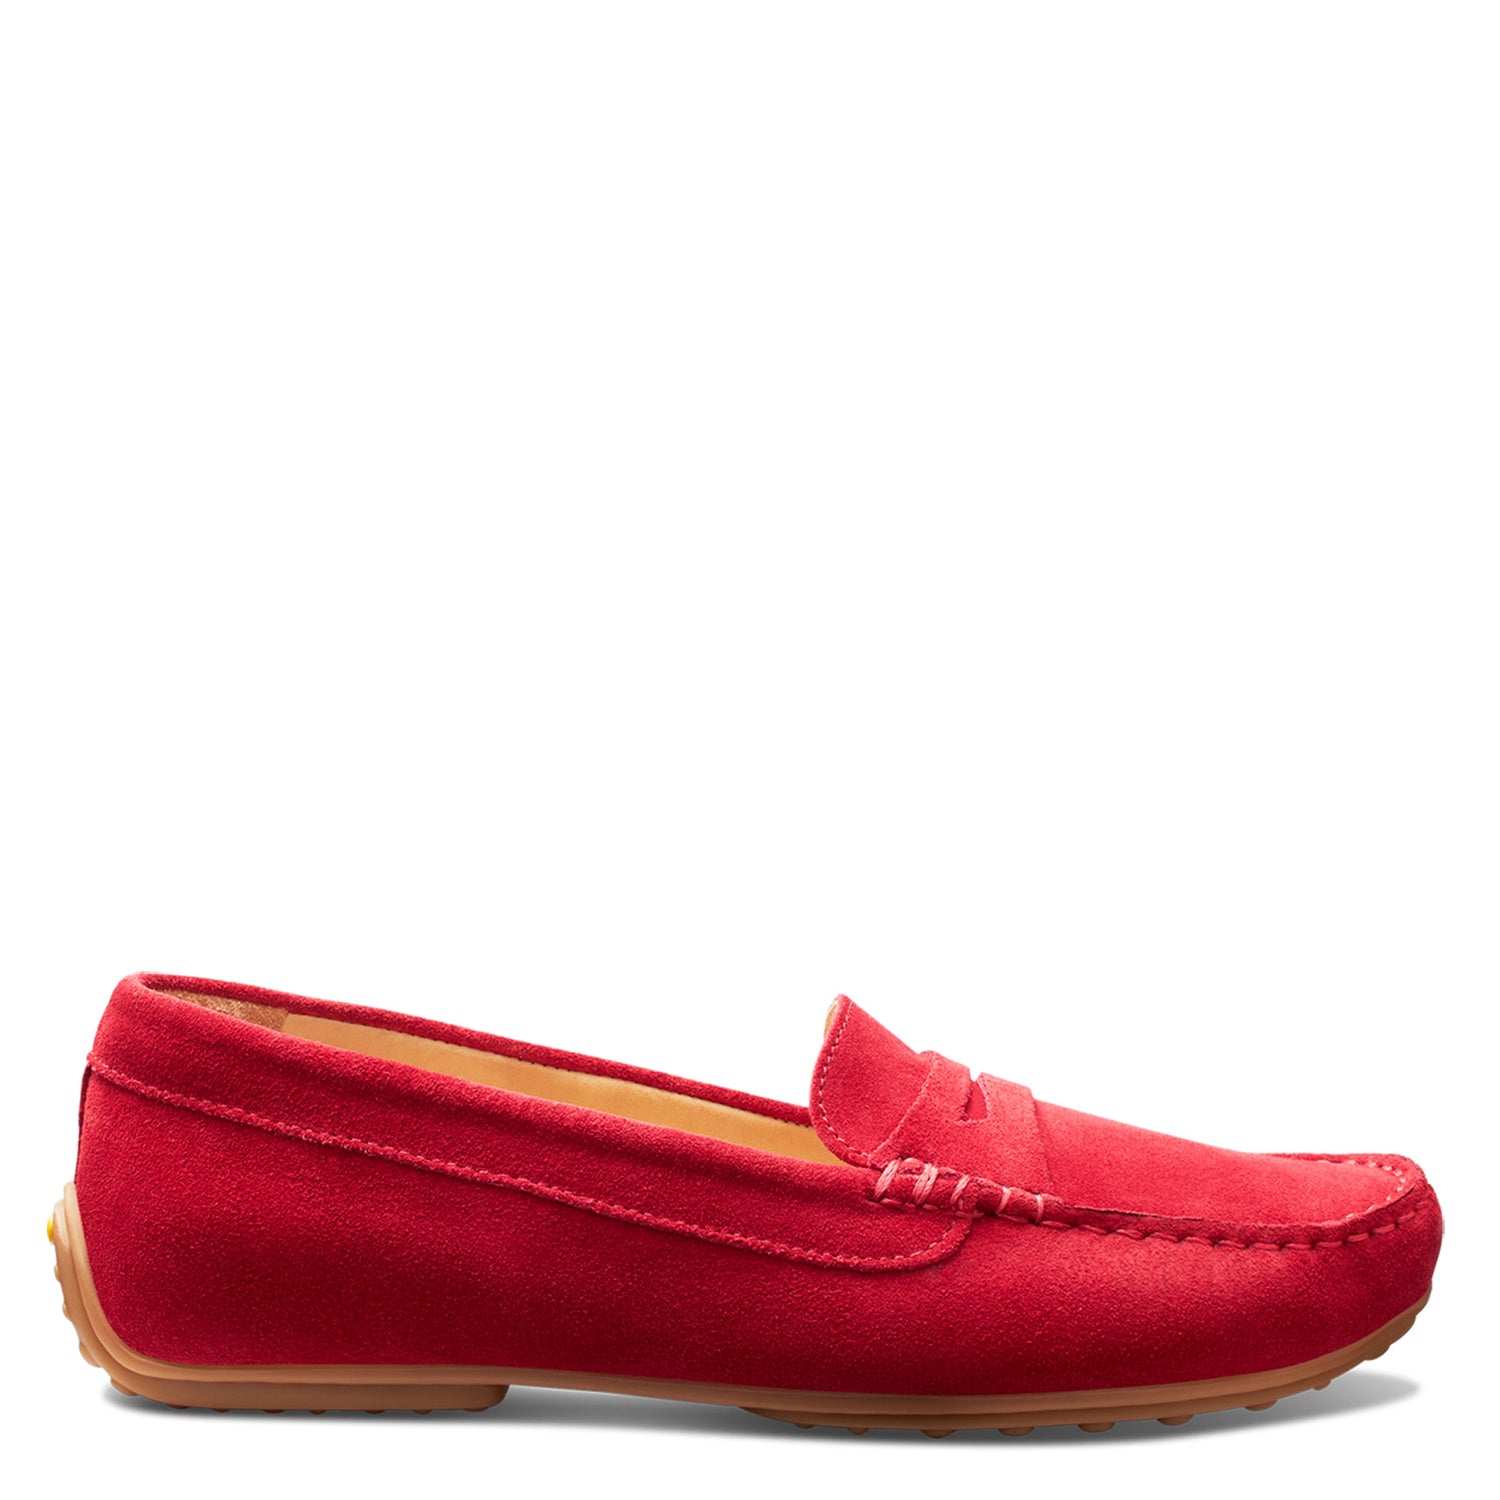 Peltz Shoes  Women's Samuel Hubbard Free Spirit Slip-On Red Suede W2111-412